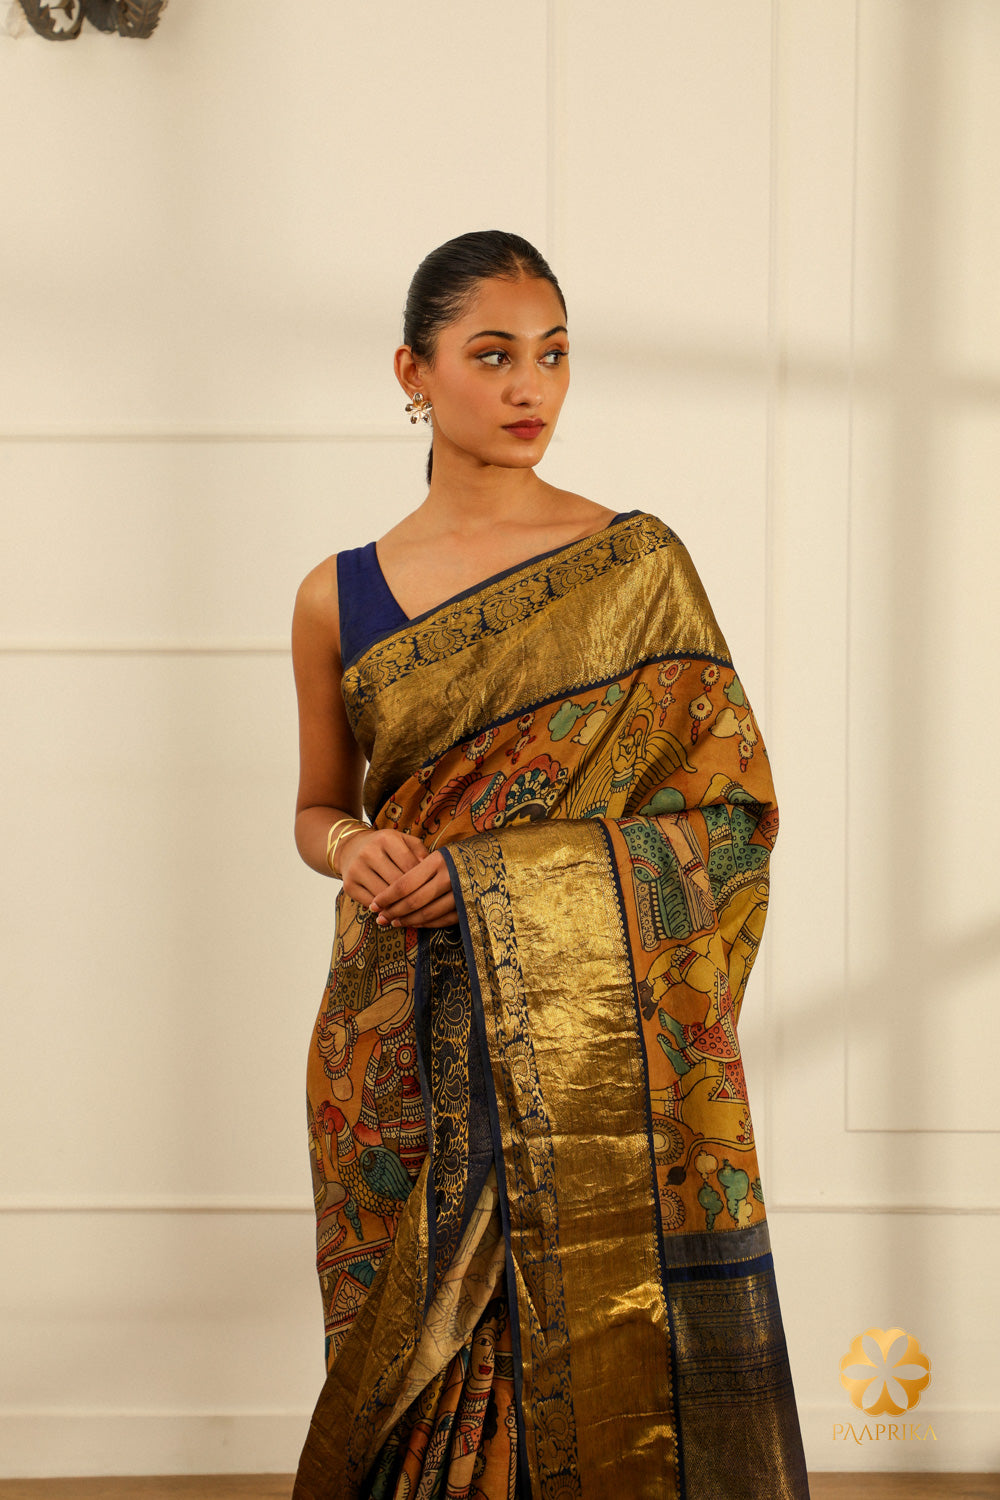 A broader view of the entire Kanjivaram saree, displaying the captivating Kalamkari design and the rich texture of the silk.